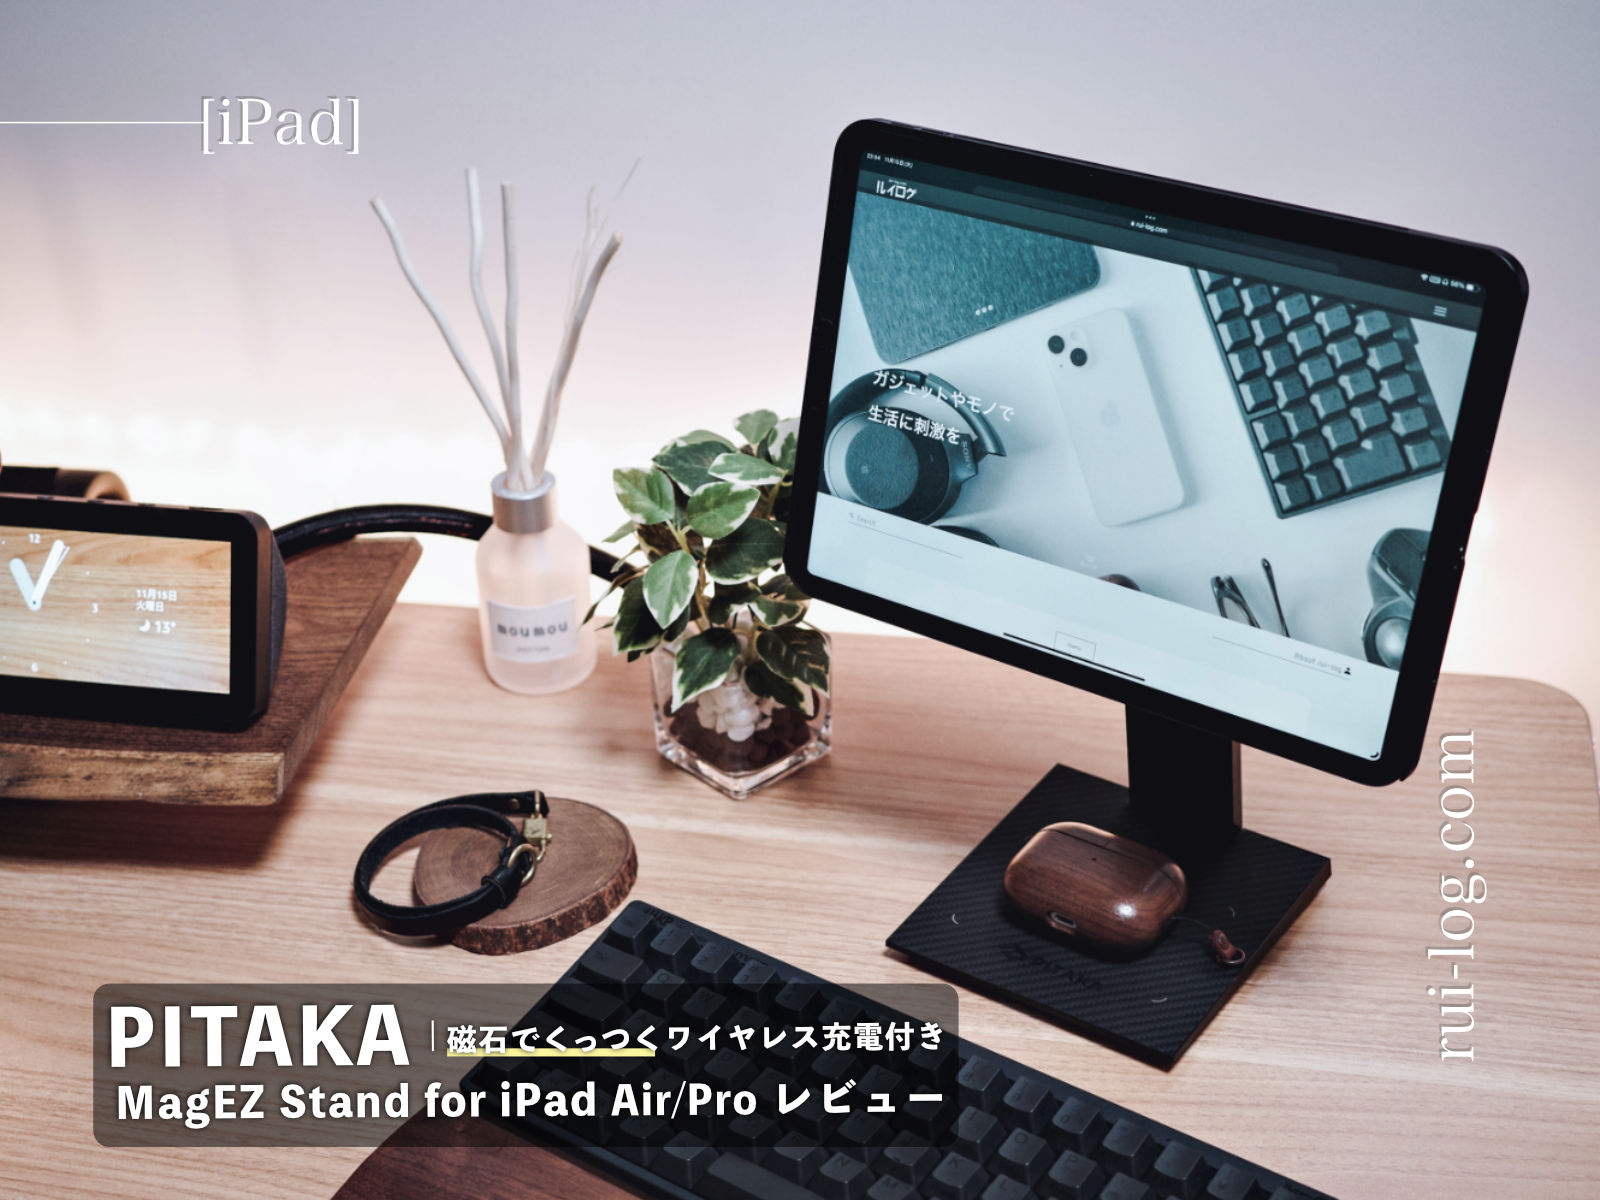 PITAKA iPad スタンド MagEZ Stand レビュー | 磁石でくっつくワイヤレス充電付き